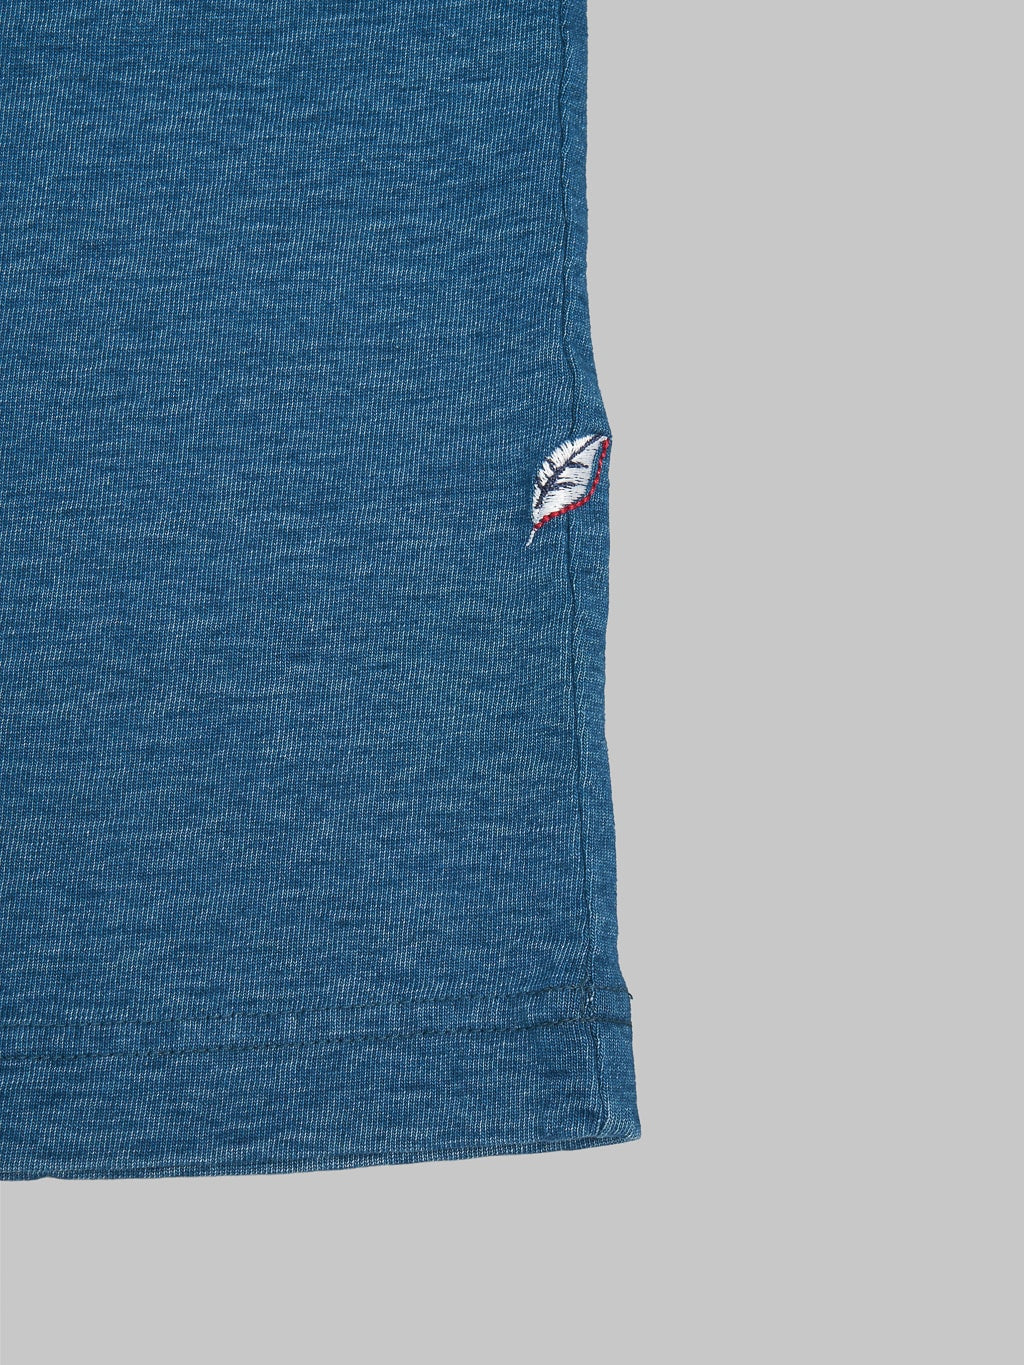 Pure Blue Japan SS5011 Greencast Indigo Dyed Crewneck TShirt embroided logo